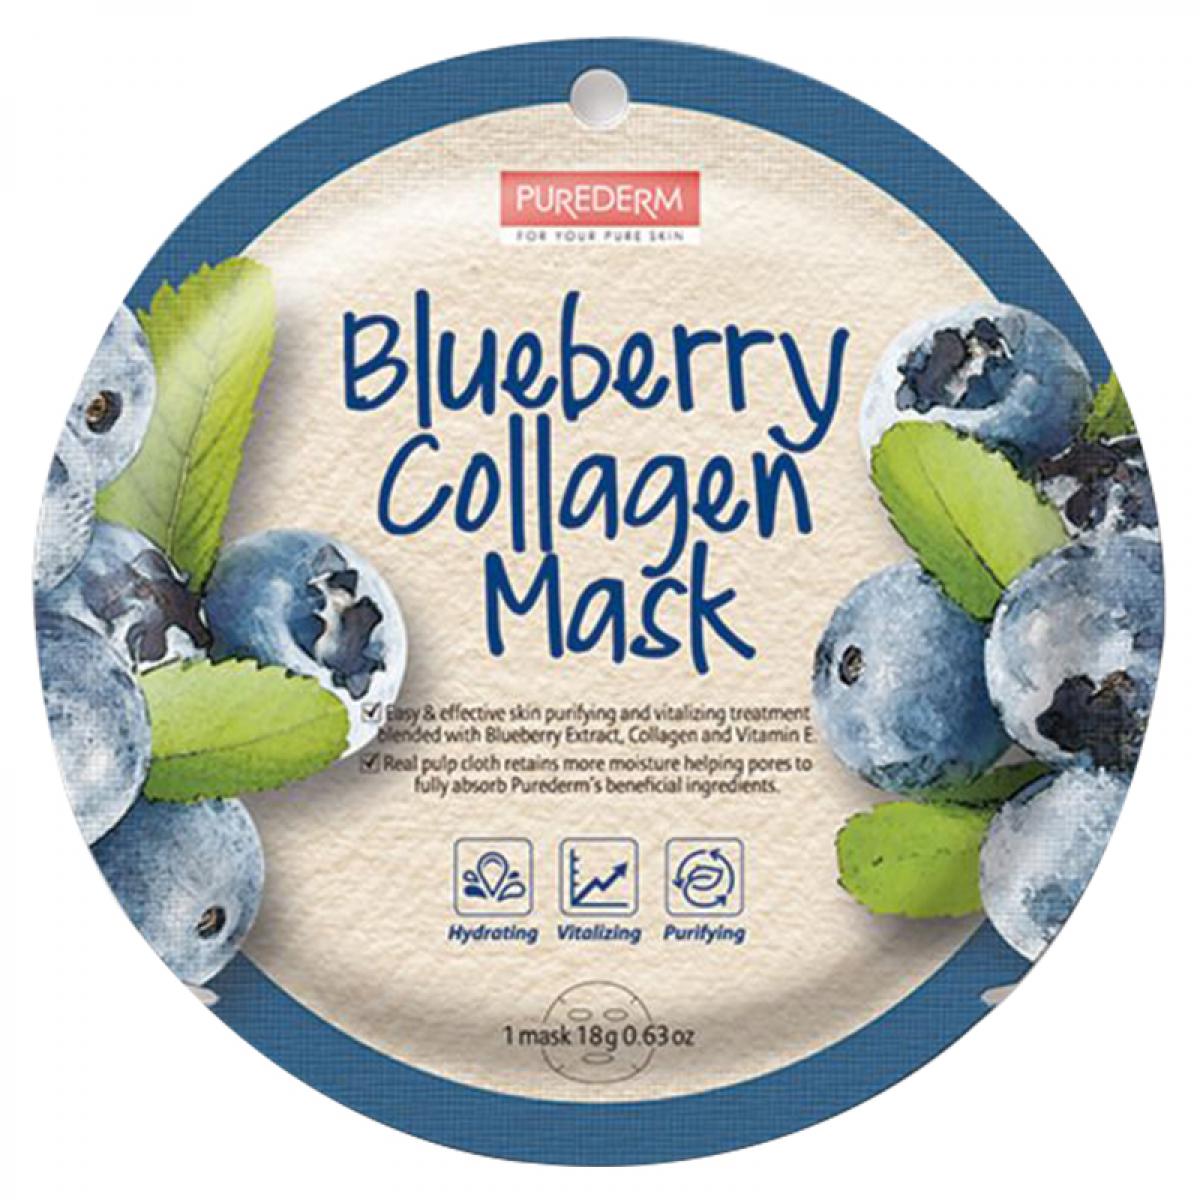 ماسک نقابی صورت حاوی عصاره بلوبری وزن 18 گرم - Purederm Blueberry Collage Mask 18gr